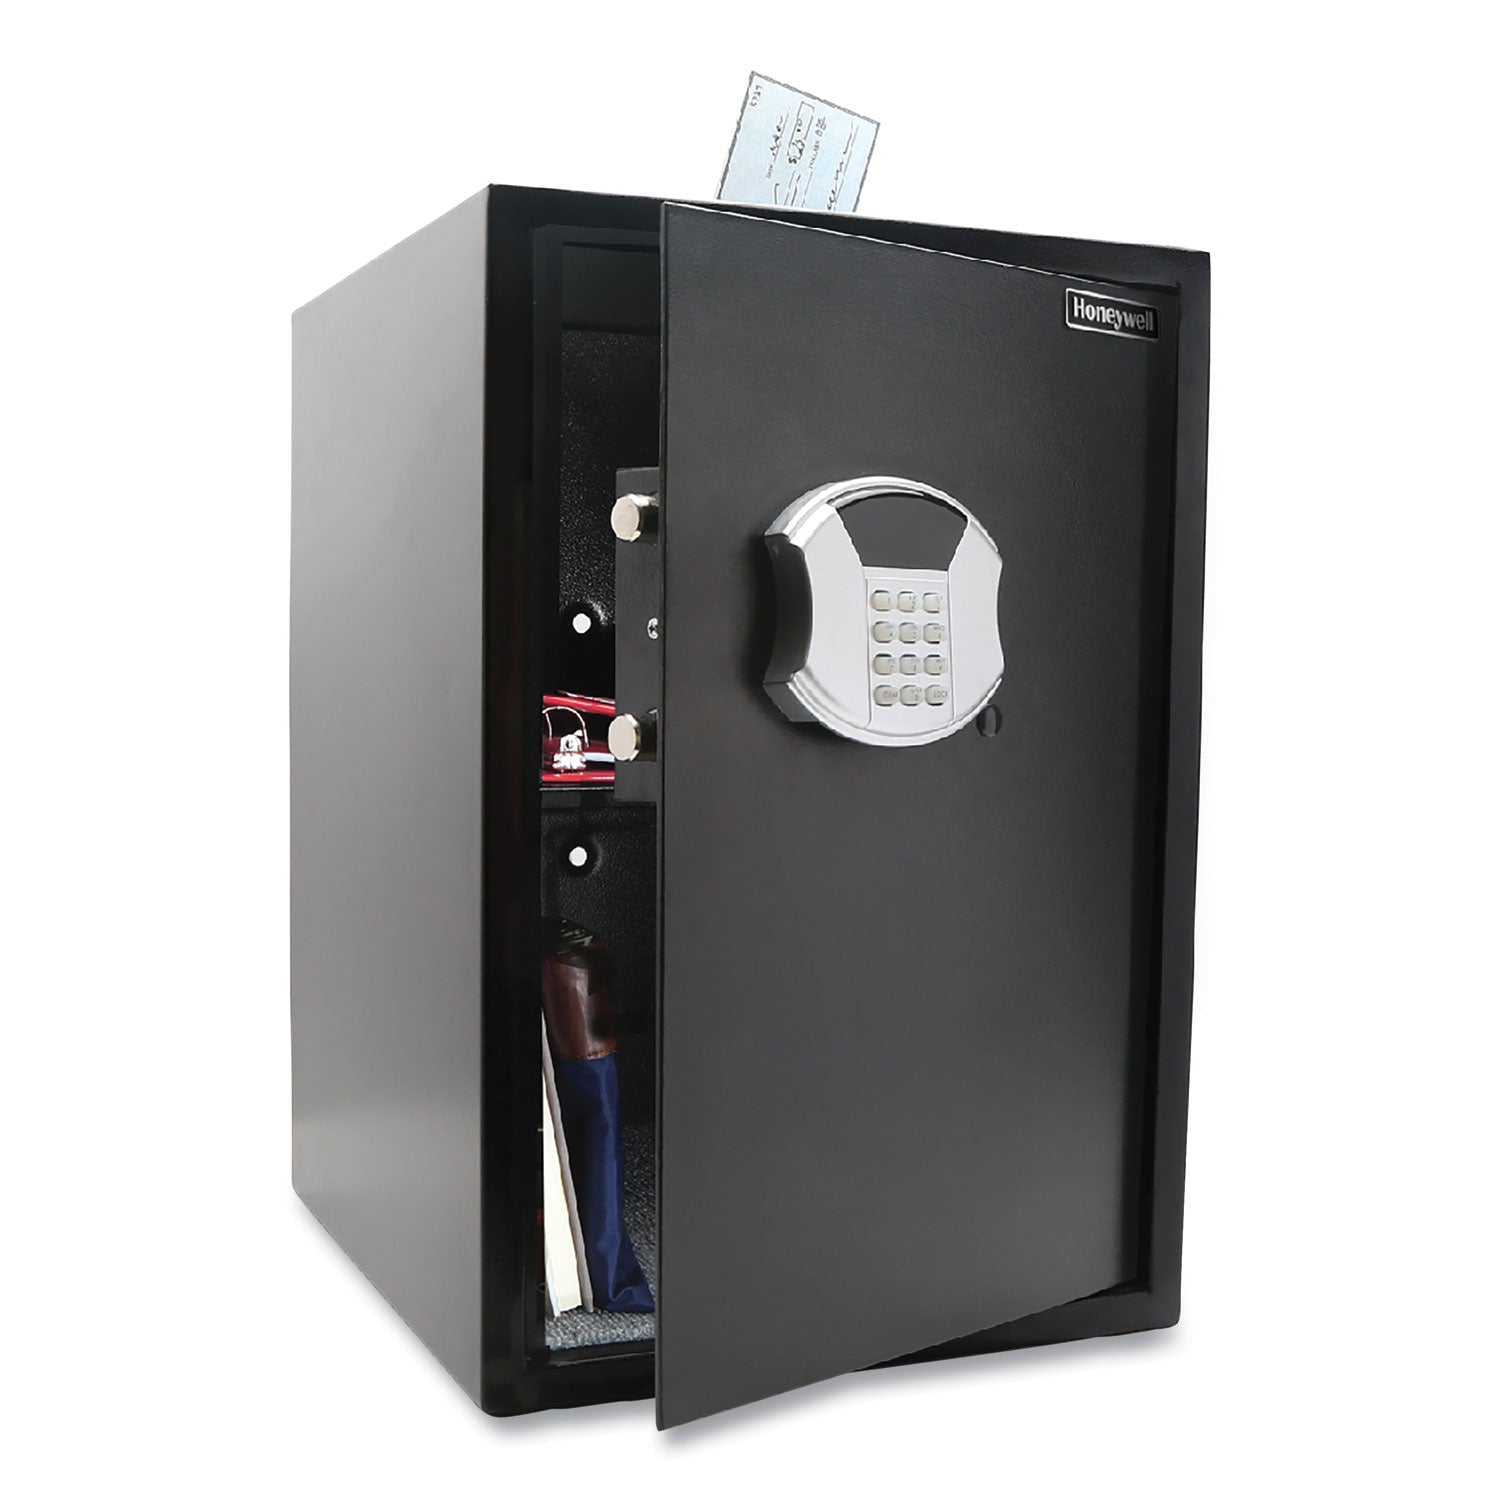 digital-steel-security-safe-with-drop-slot-15-x-78-x-22-287-cu-ft-black_hwl5107s - 1